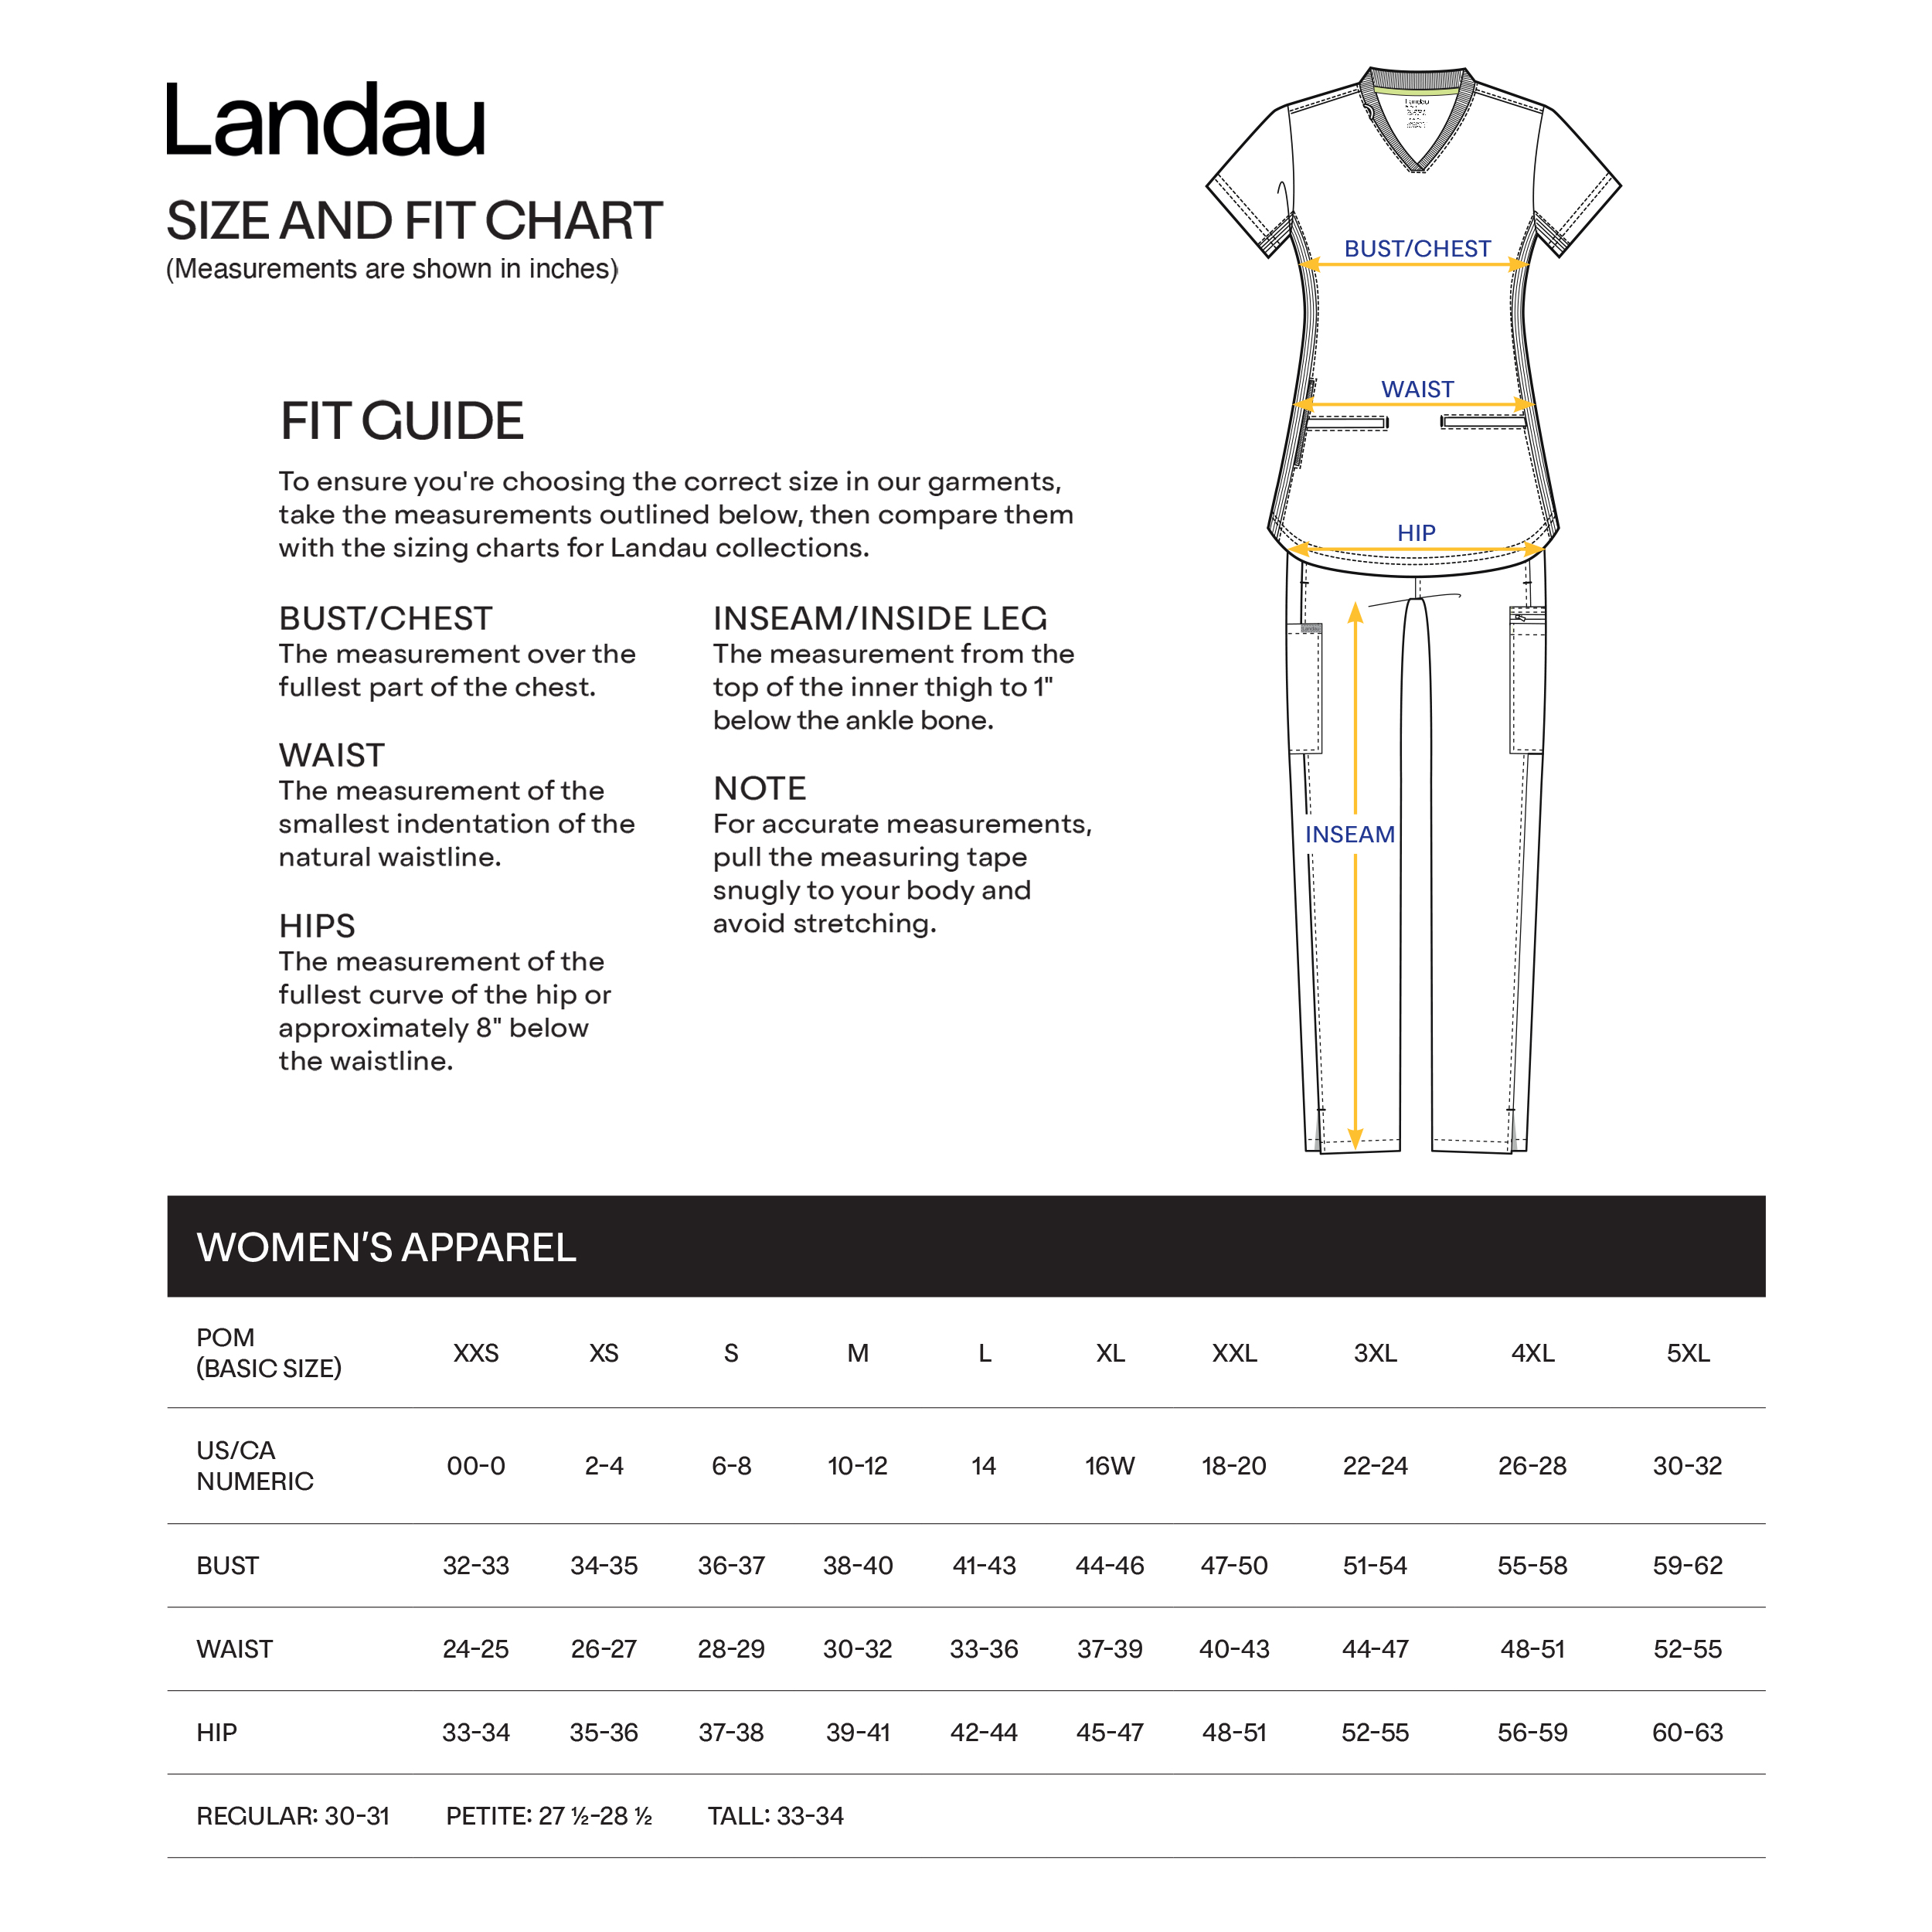 Landau Essentials Women's 4-Pocket V-Neck Scrub Top